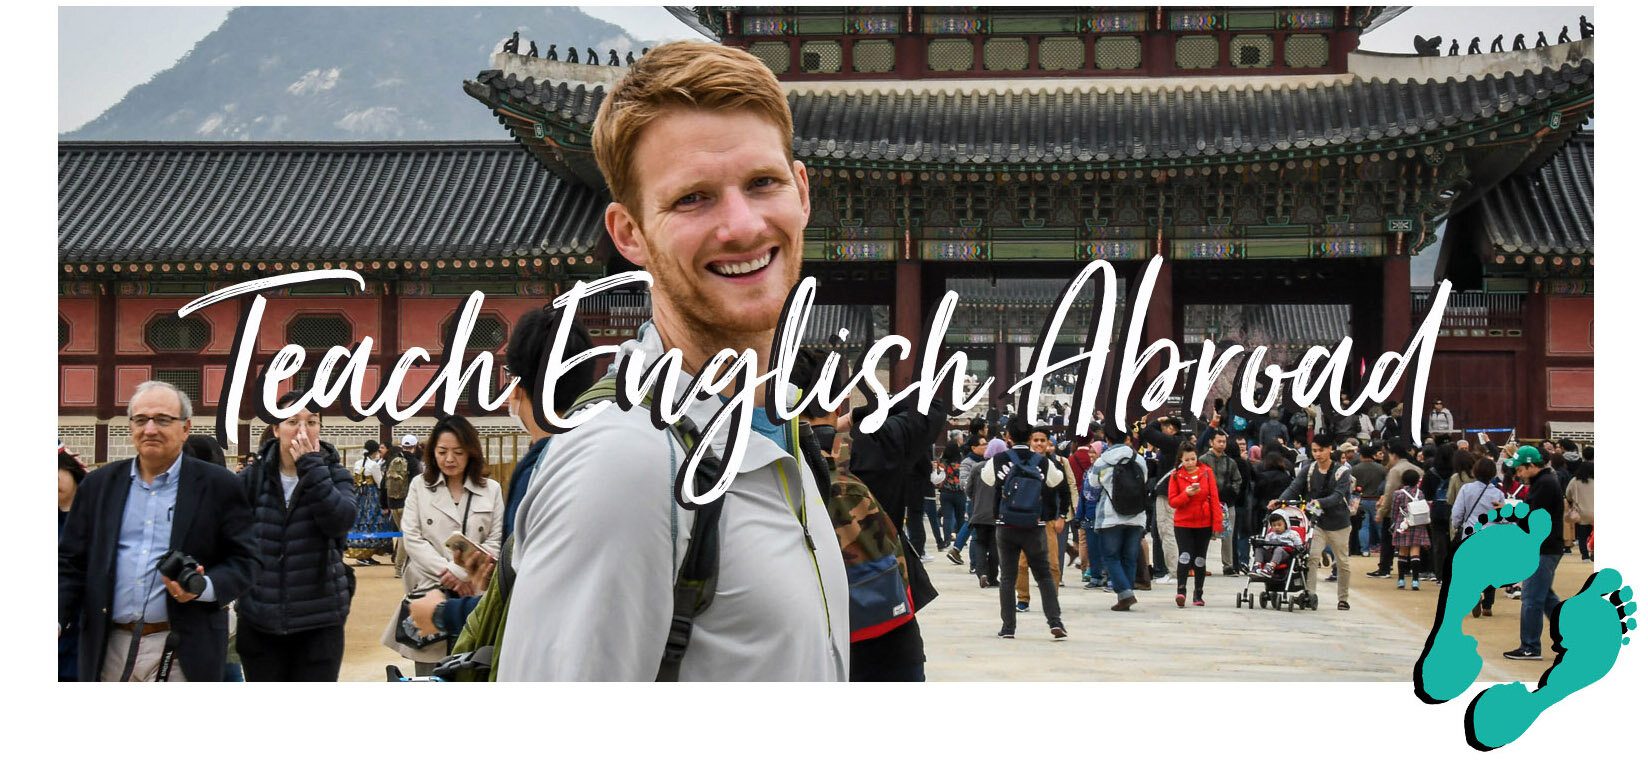 Teach English Abroad